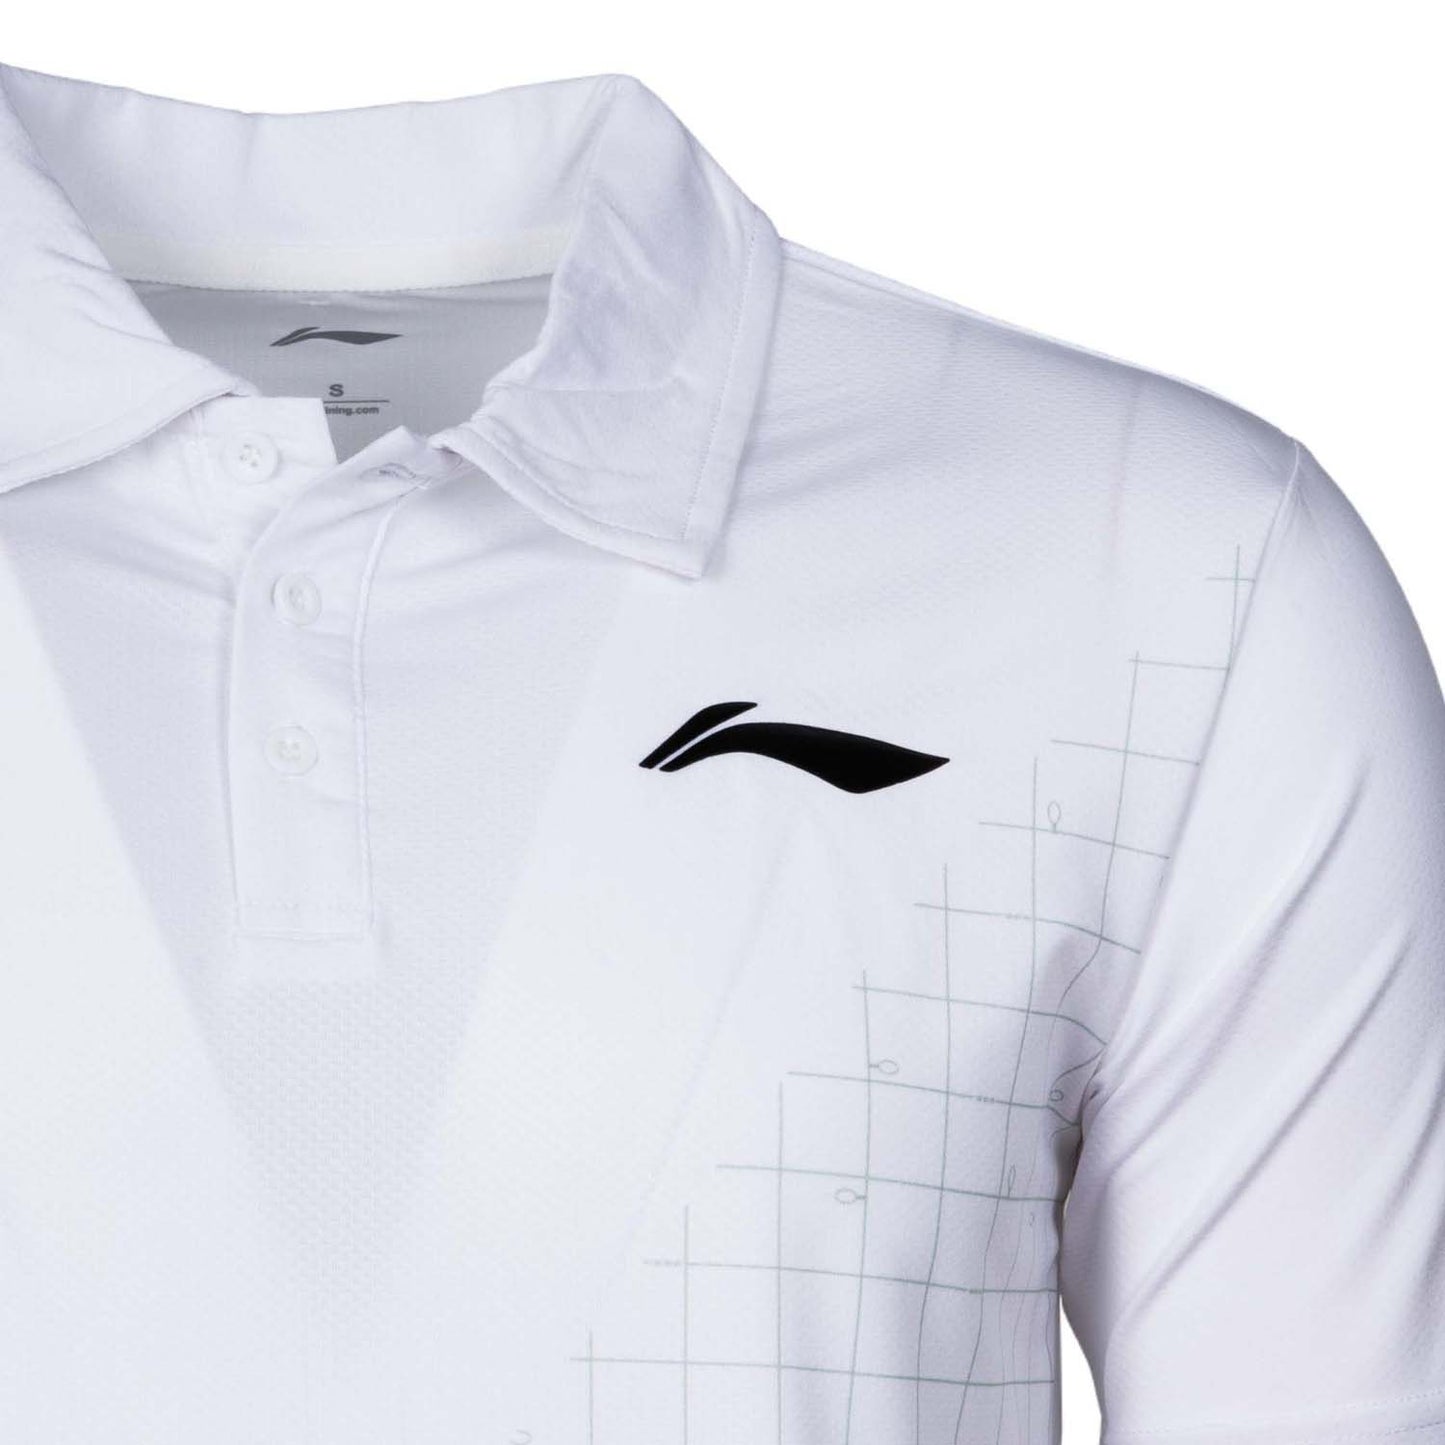 Li-Ning Badminton Polo Neck Tshirt, White - Best Price online Prokicksports.com